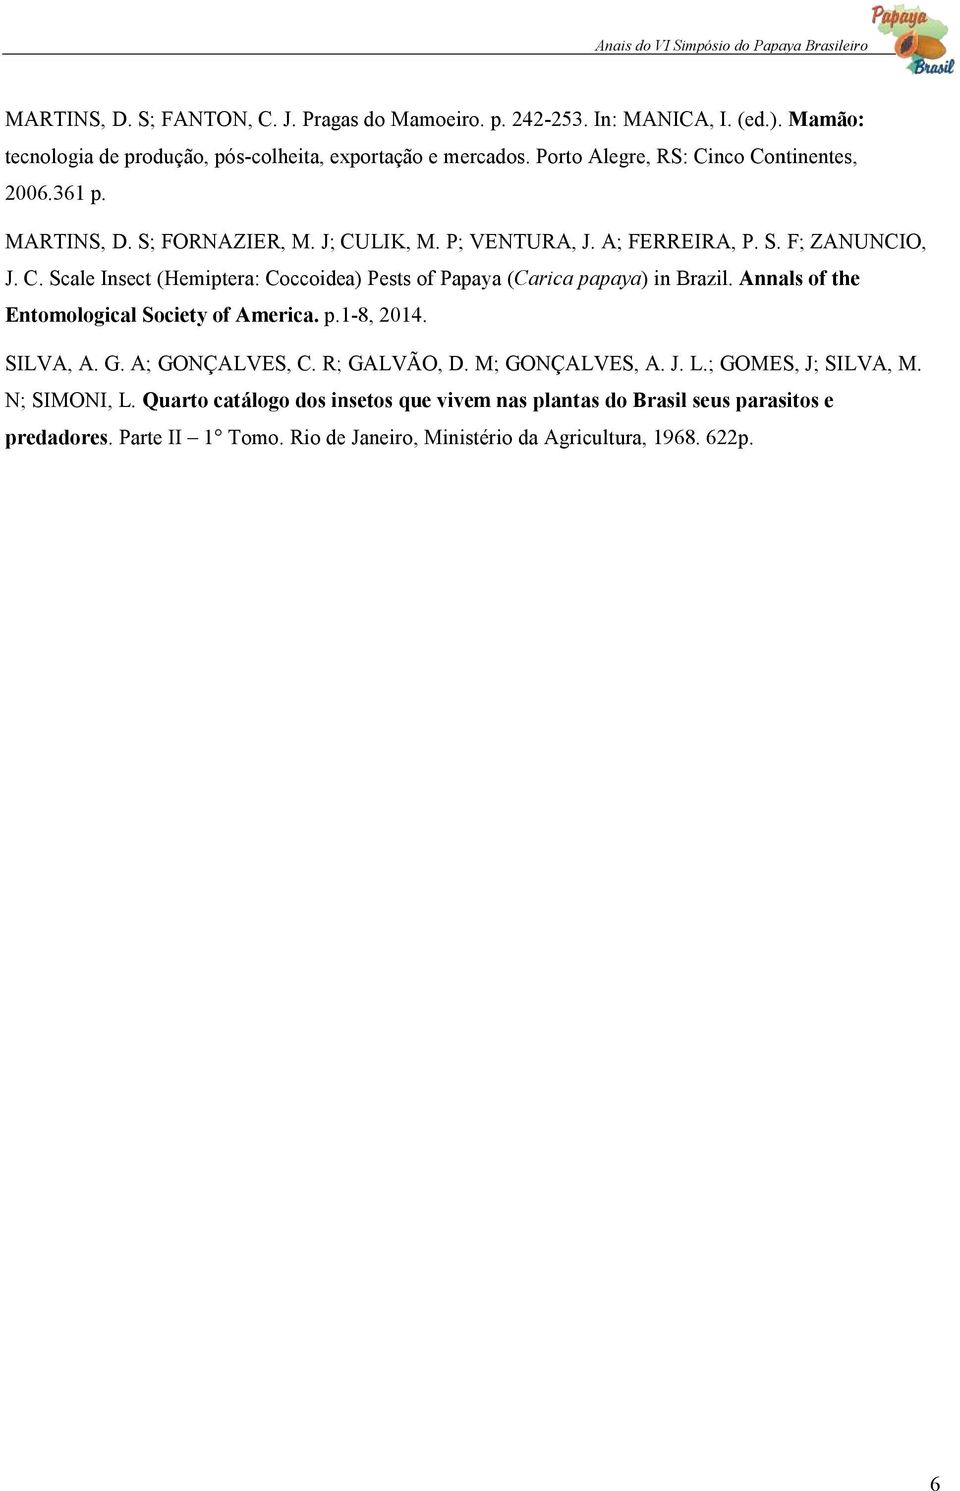 Annals of the Entomological Society of America. p.1-8, 2014. SILVA, A. G. A; GONÇALVES, C. R; GALVÃO, D. M; GONÇALVES, A. J. L.; GOMES, J; SILVA, M. N; SIMONI, L.